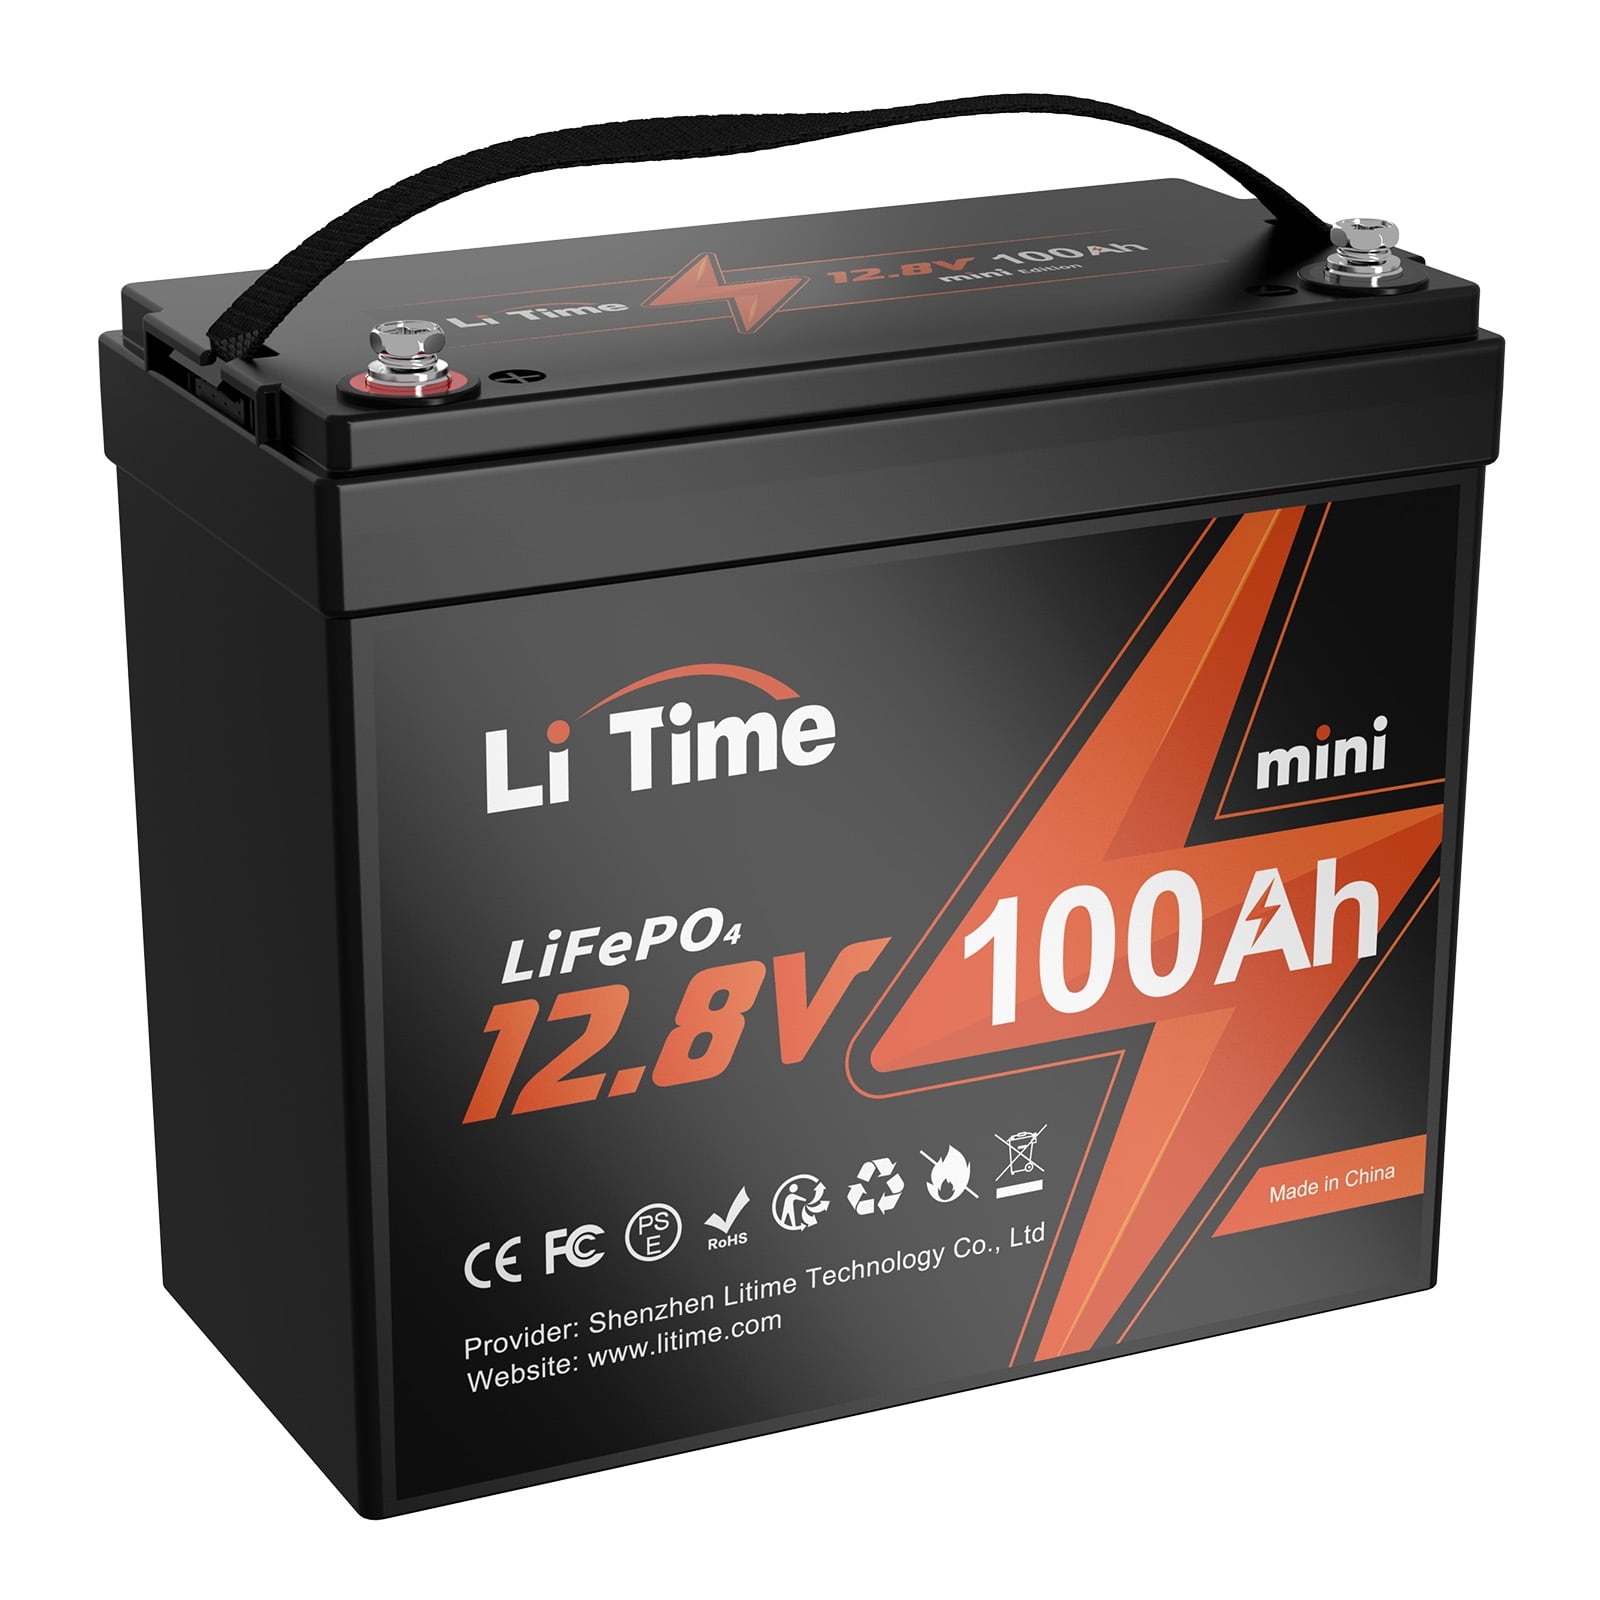 LiTime 12V 100Ah MINI LiFePO4 Lithium Battery, Upgraded Max